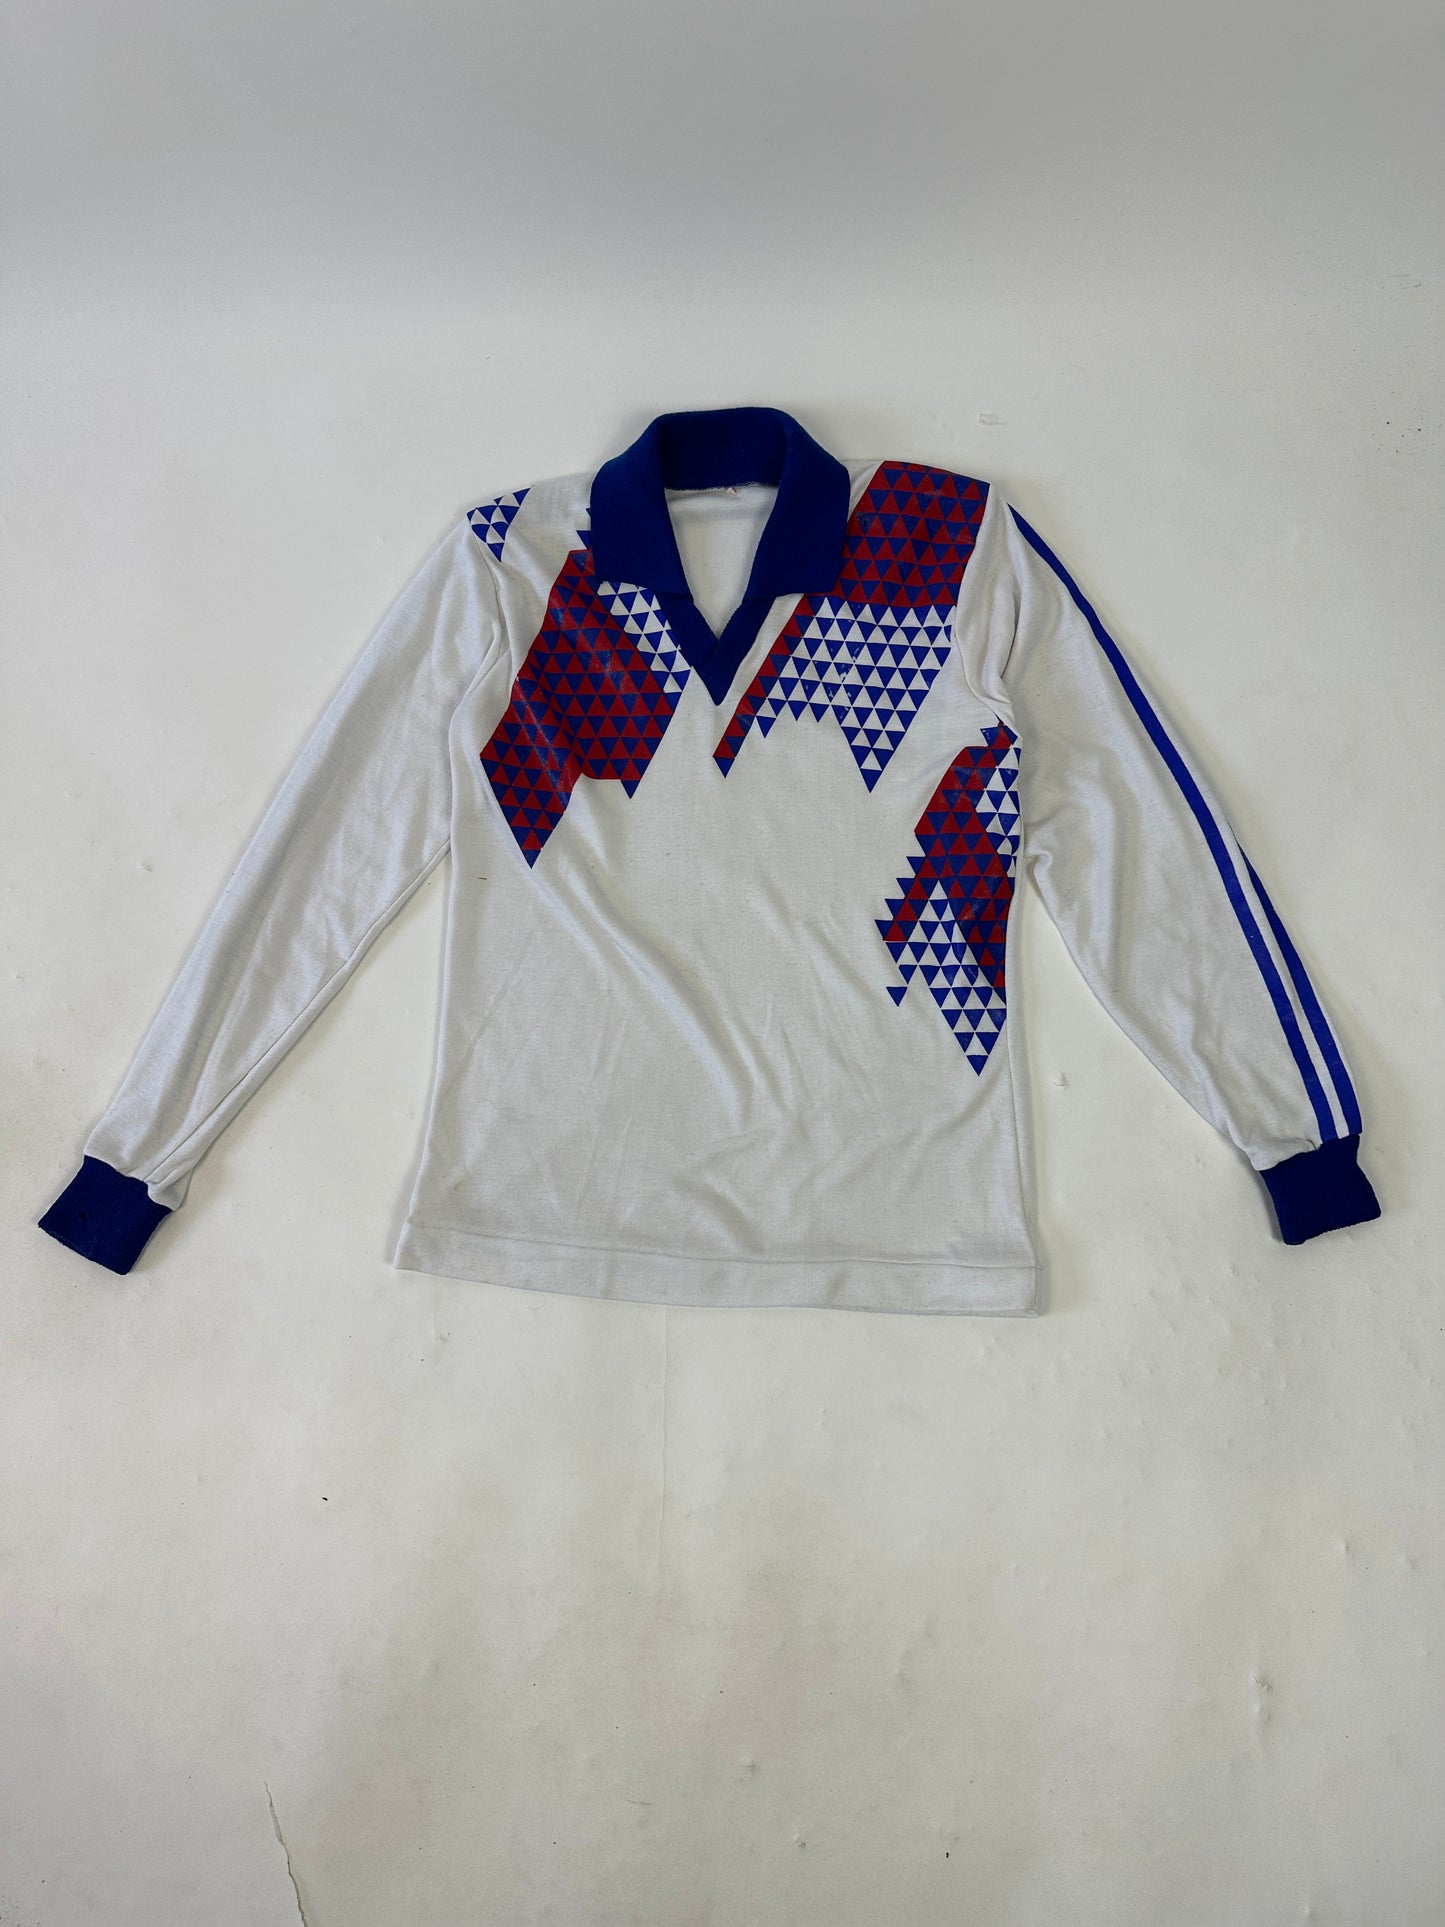 Triangulos 80's Vintage Jersey - S